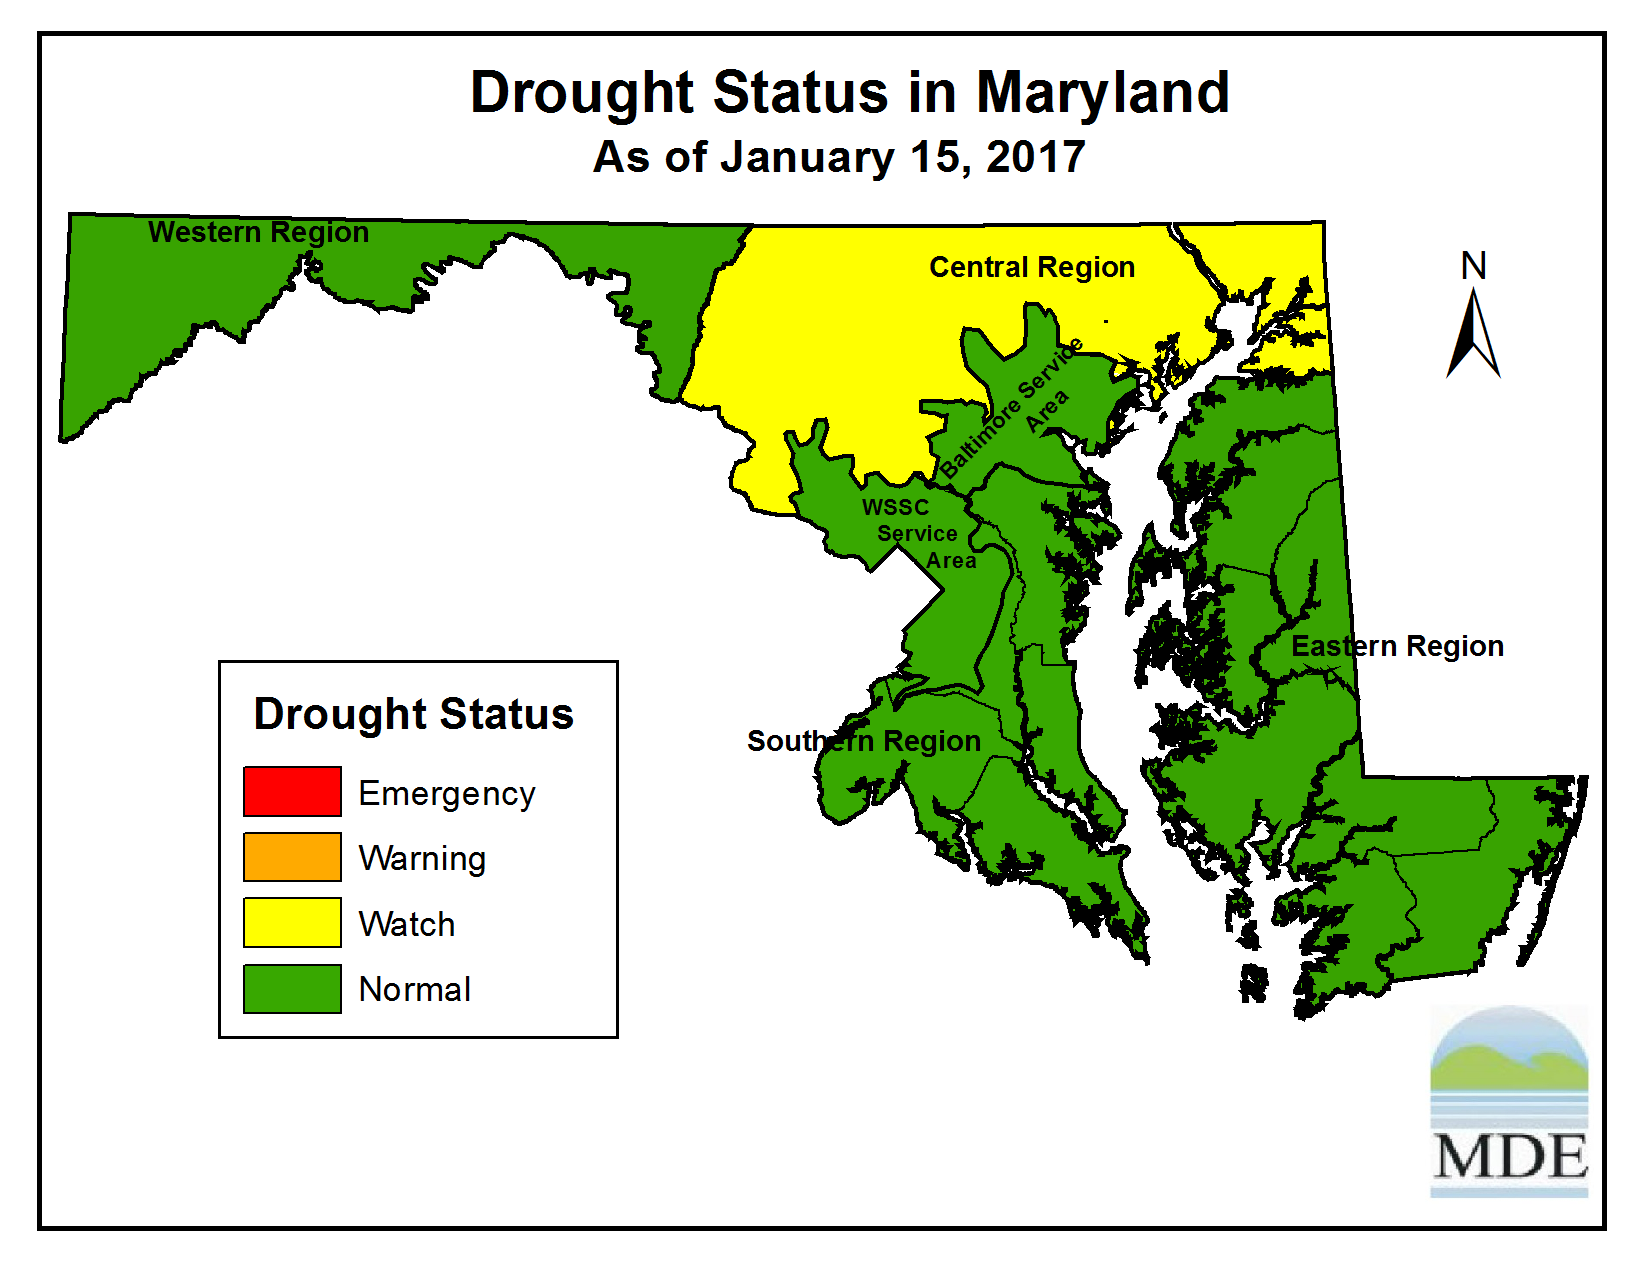 Drought Status as of January 15, 2017